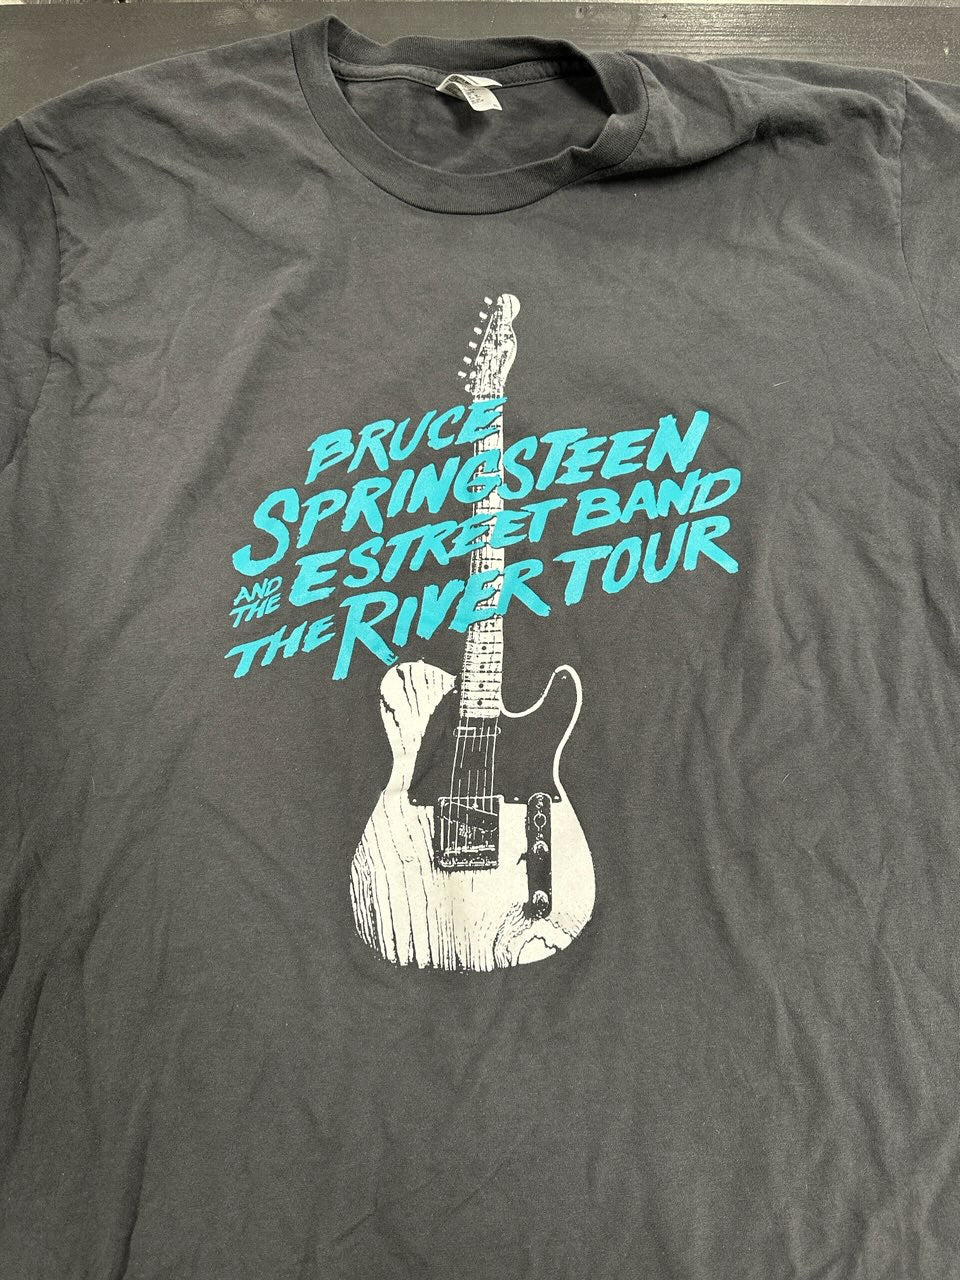 Bruce Springsteen 2016 The River Tour T-Shirt, Grey, XL